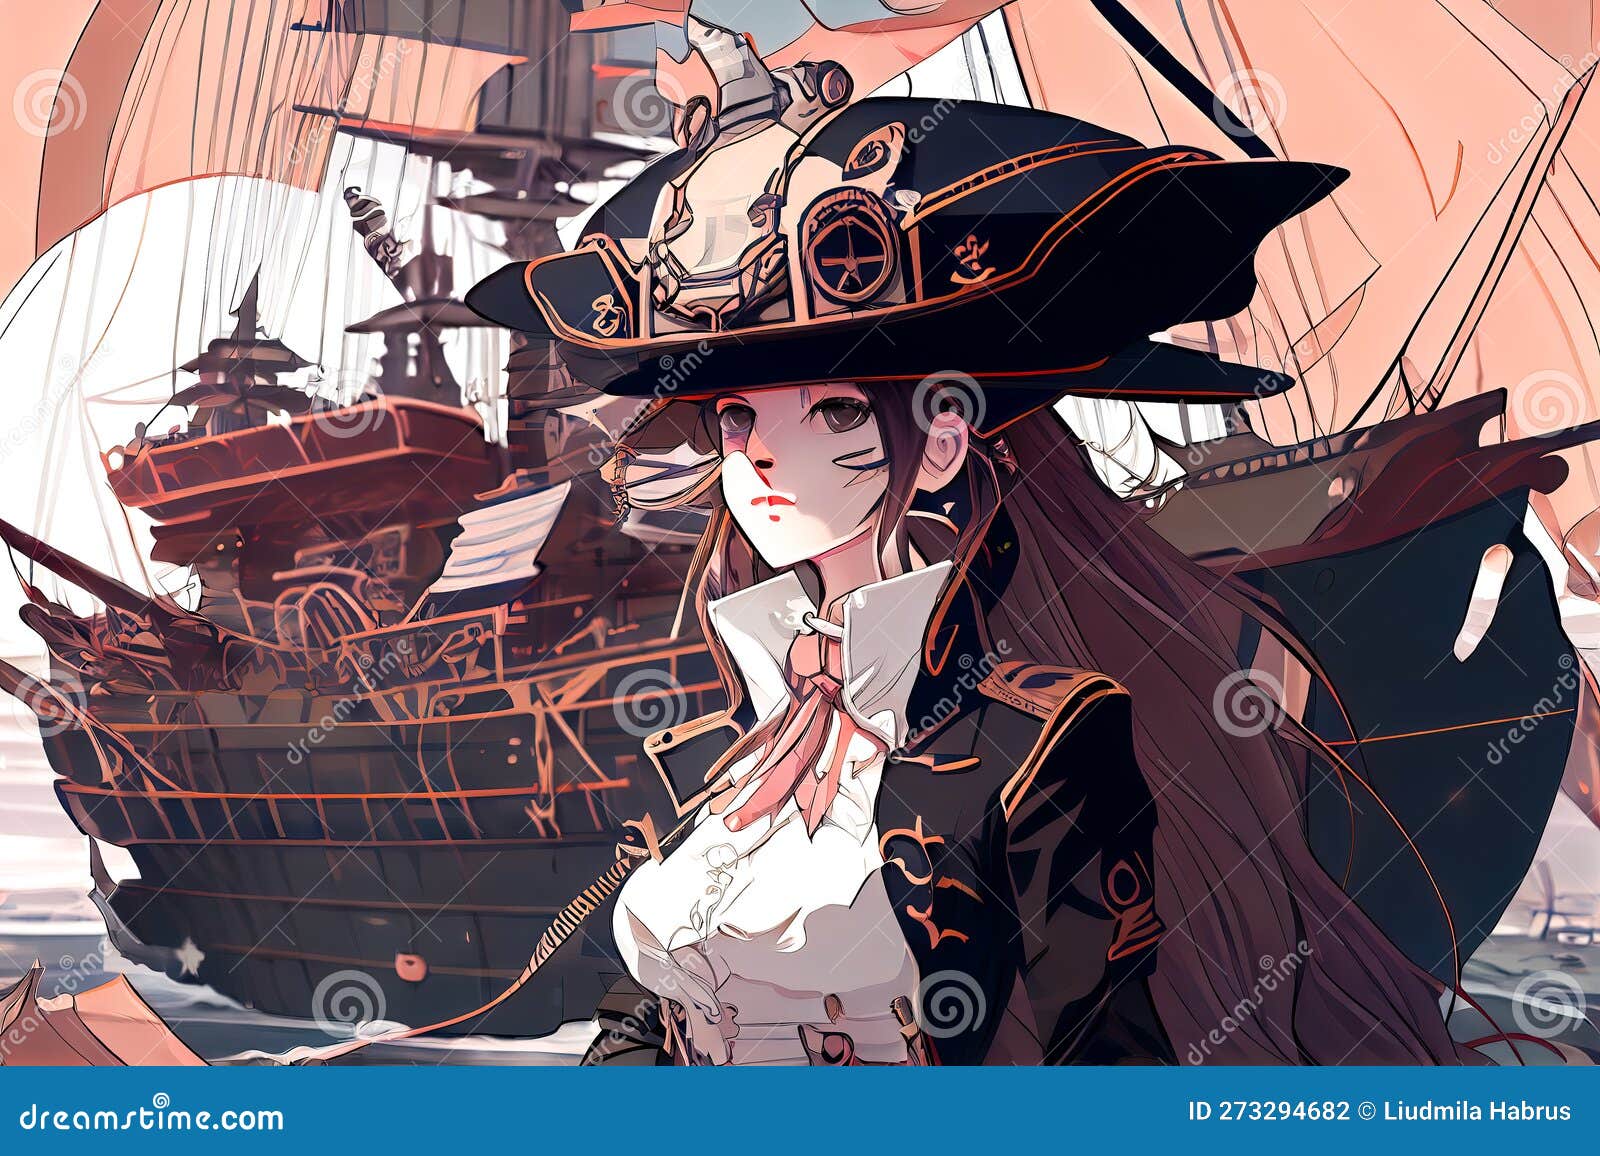 Best Pirates Anime List | Popular Anime With Pirates-demhanvico.com.vn